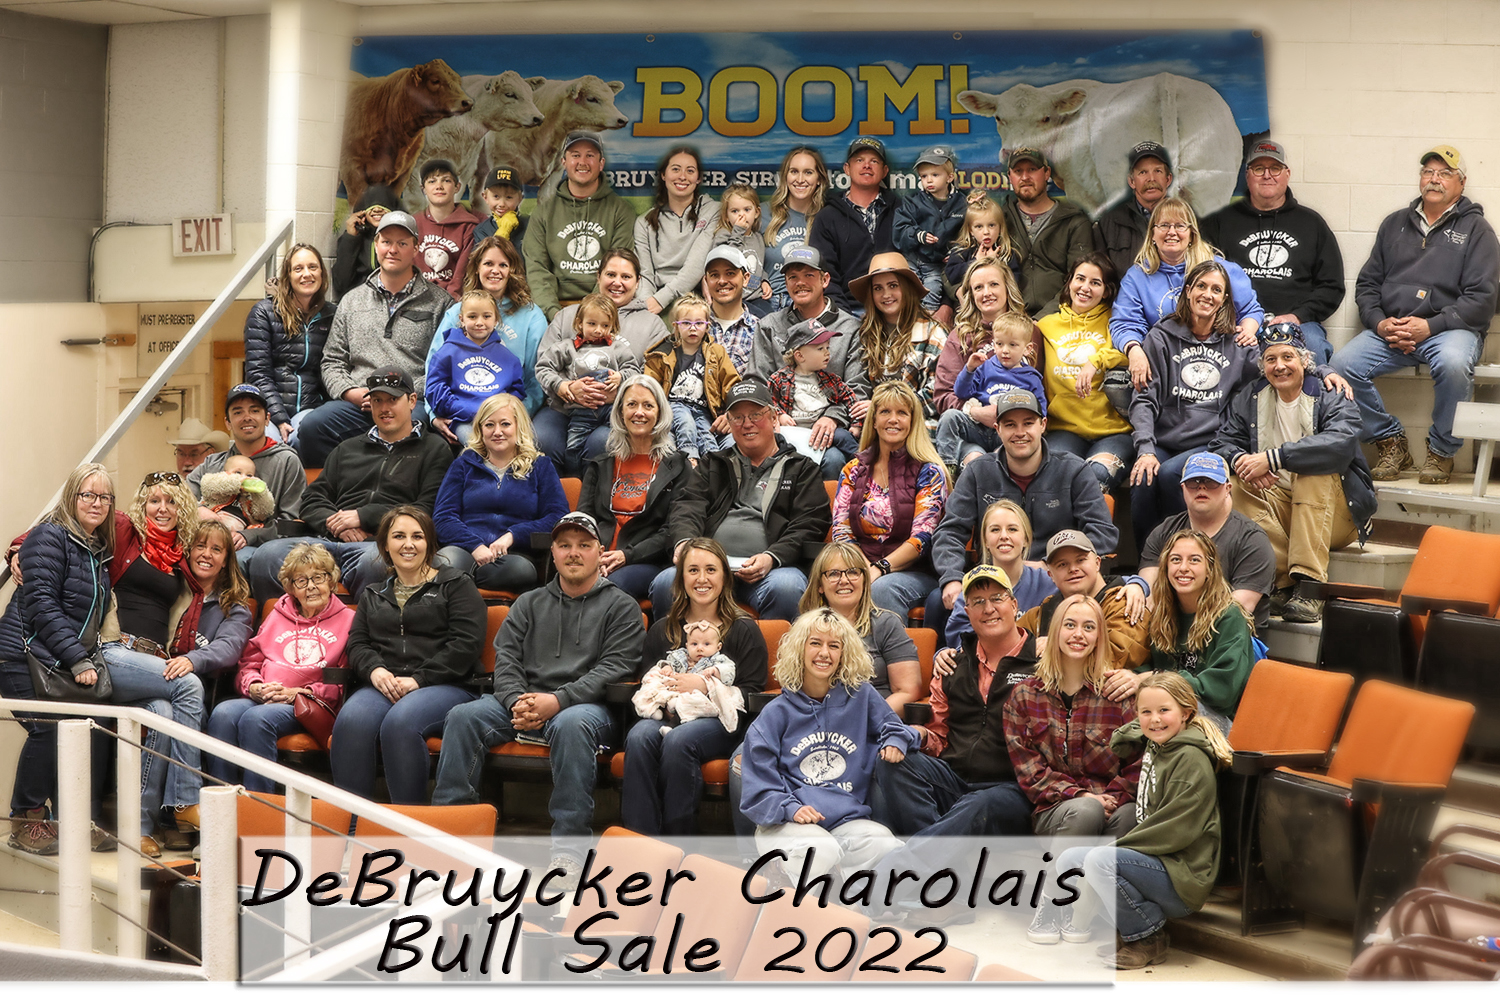 Meet the DeBruycker family!!